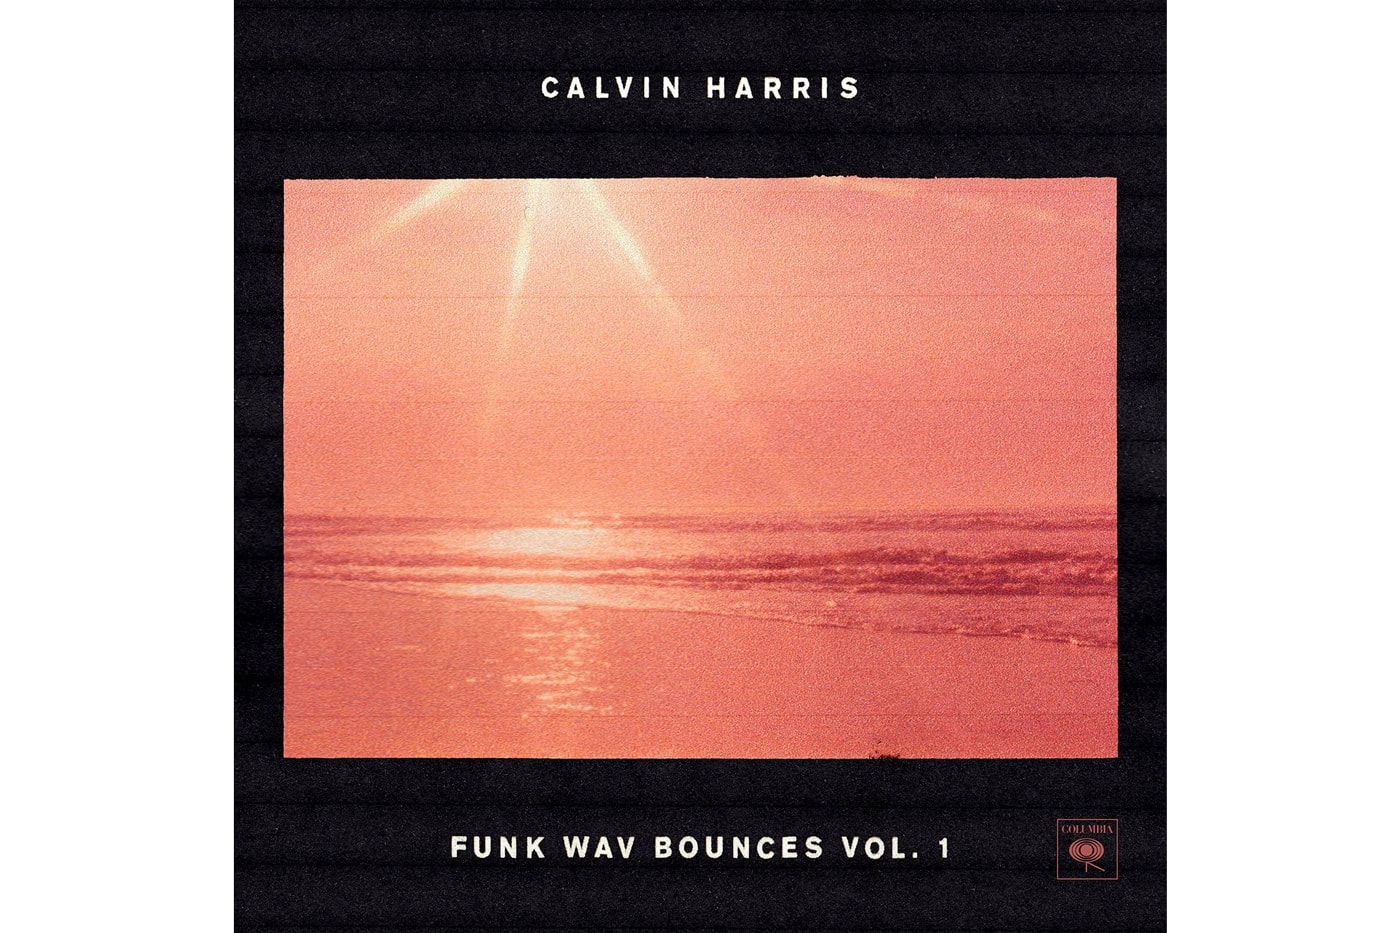 Listen to Calvin Harris' 'Funk Wav Bounces Vol. 1'